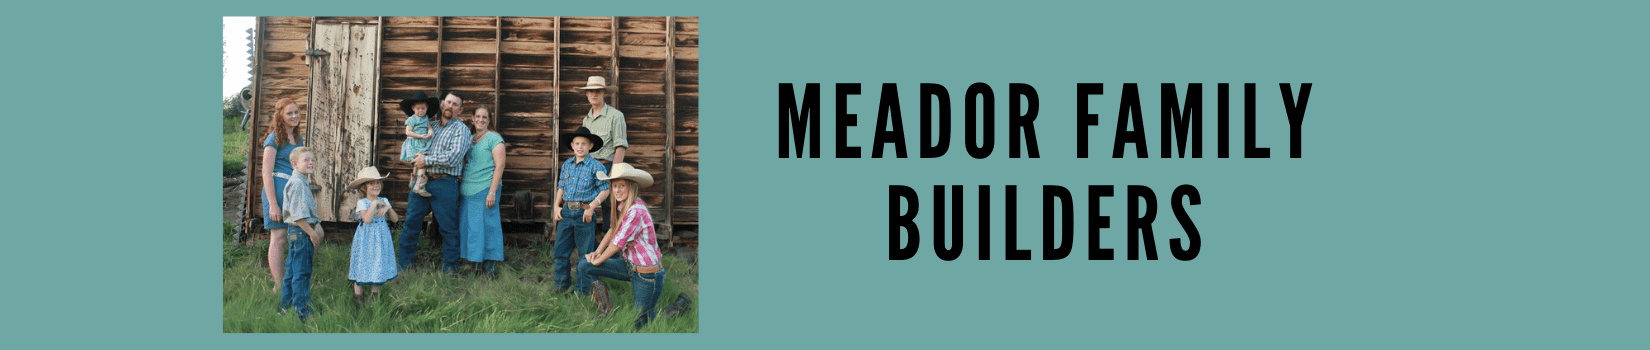 Meador Family Builders